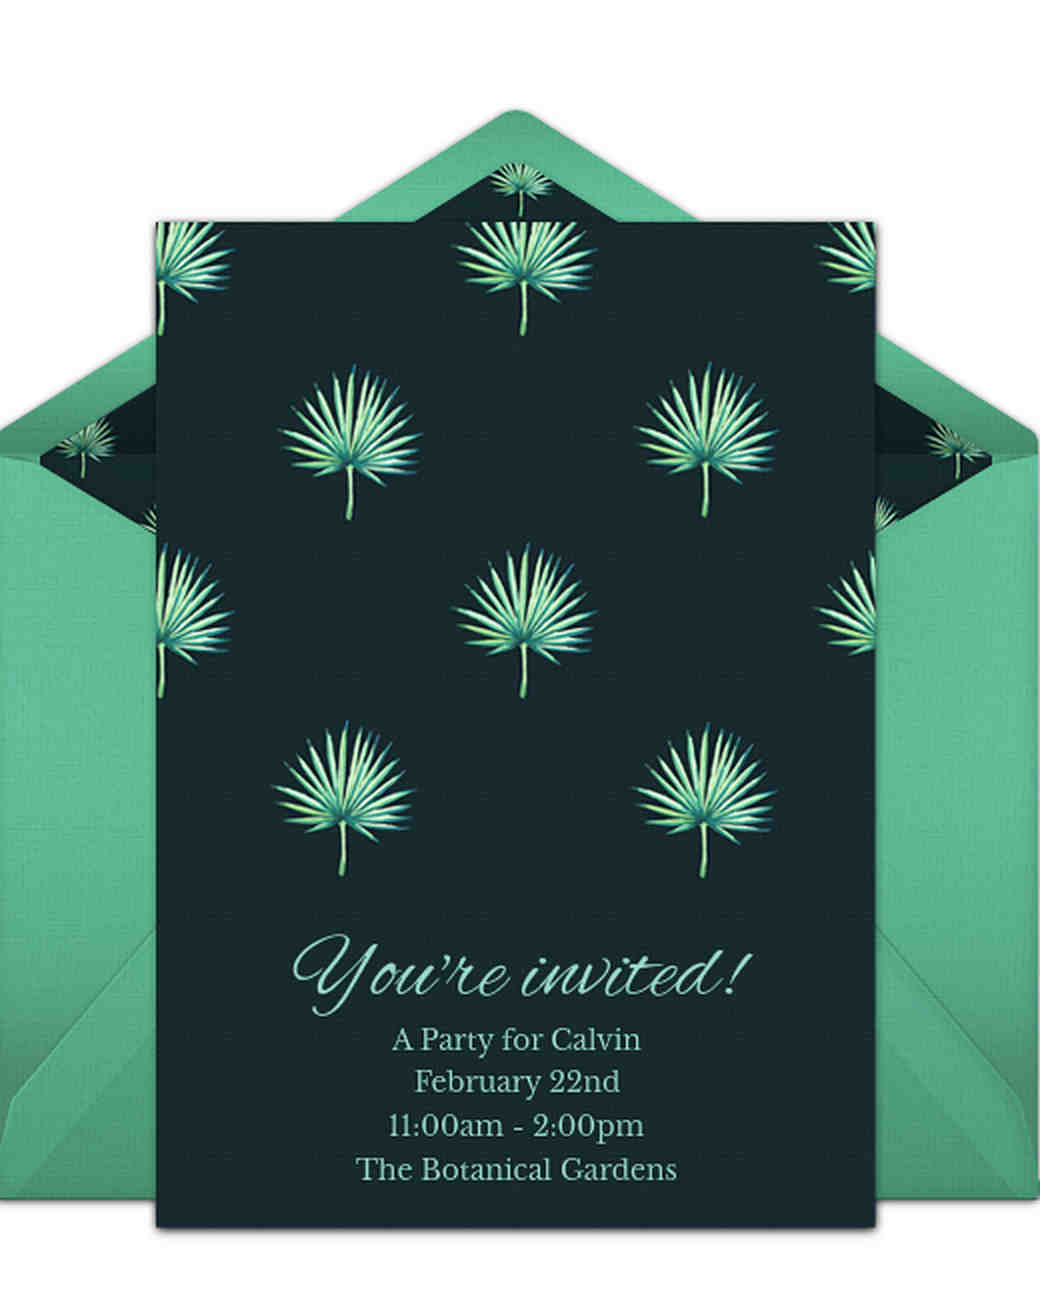 paperless invitations